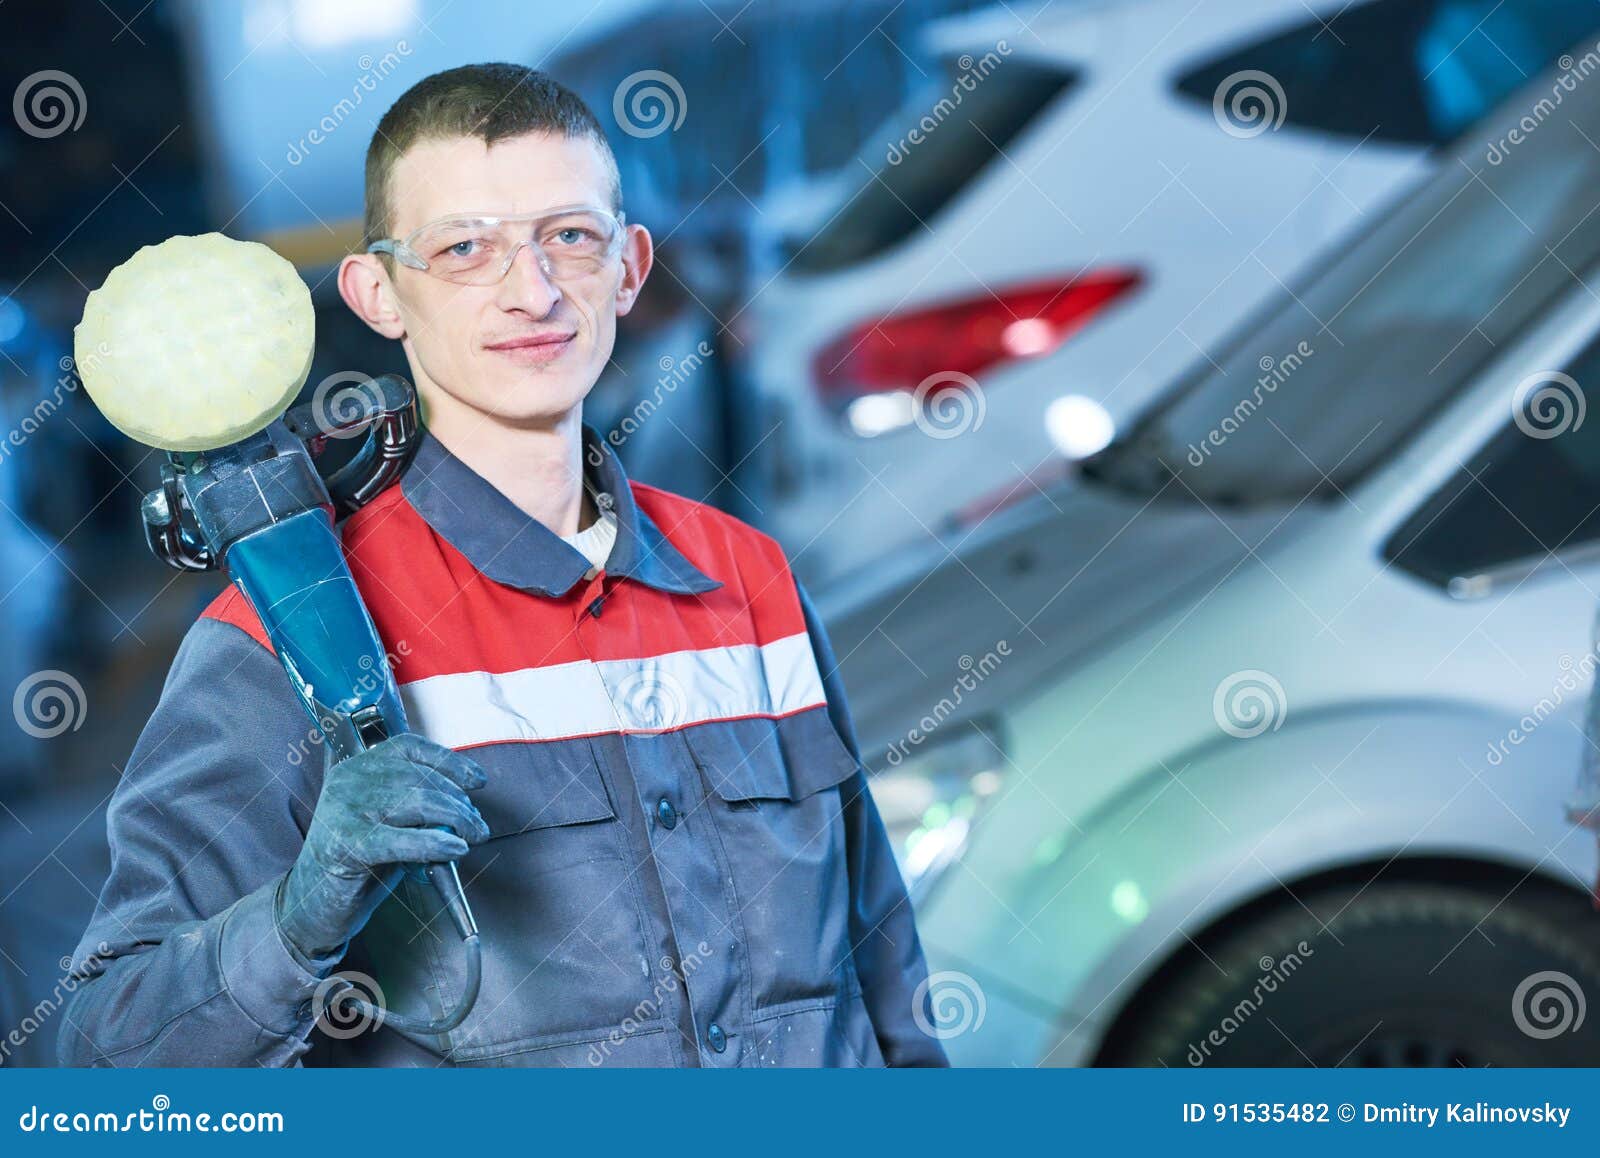 auto mechanic with buffing machine